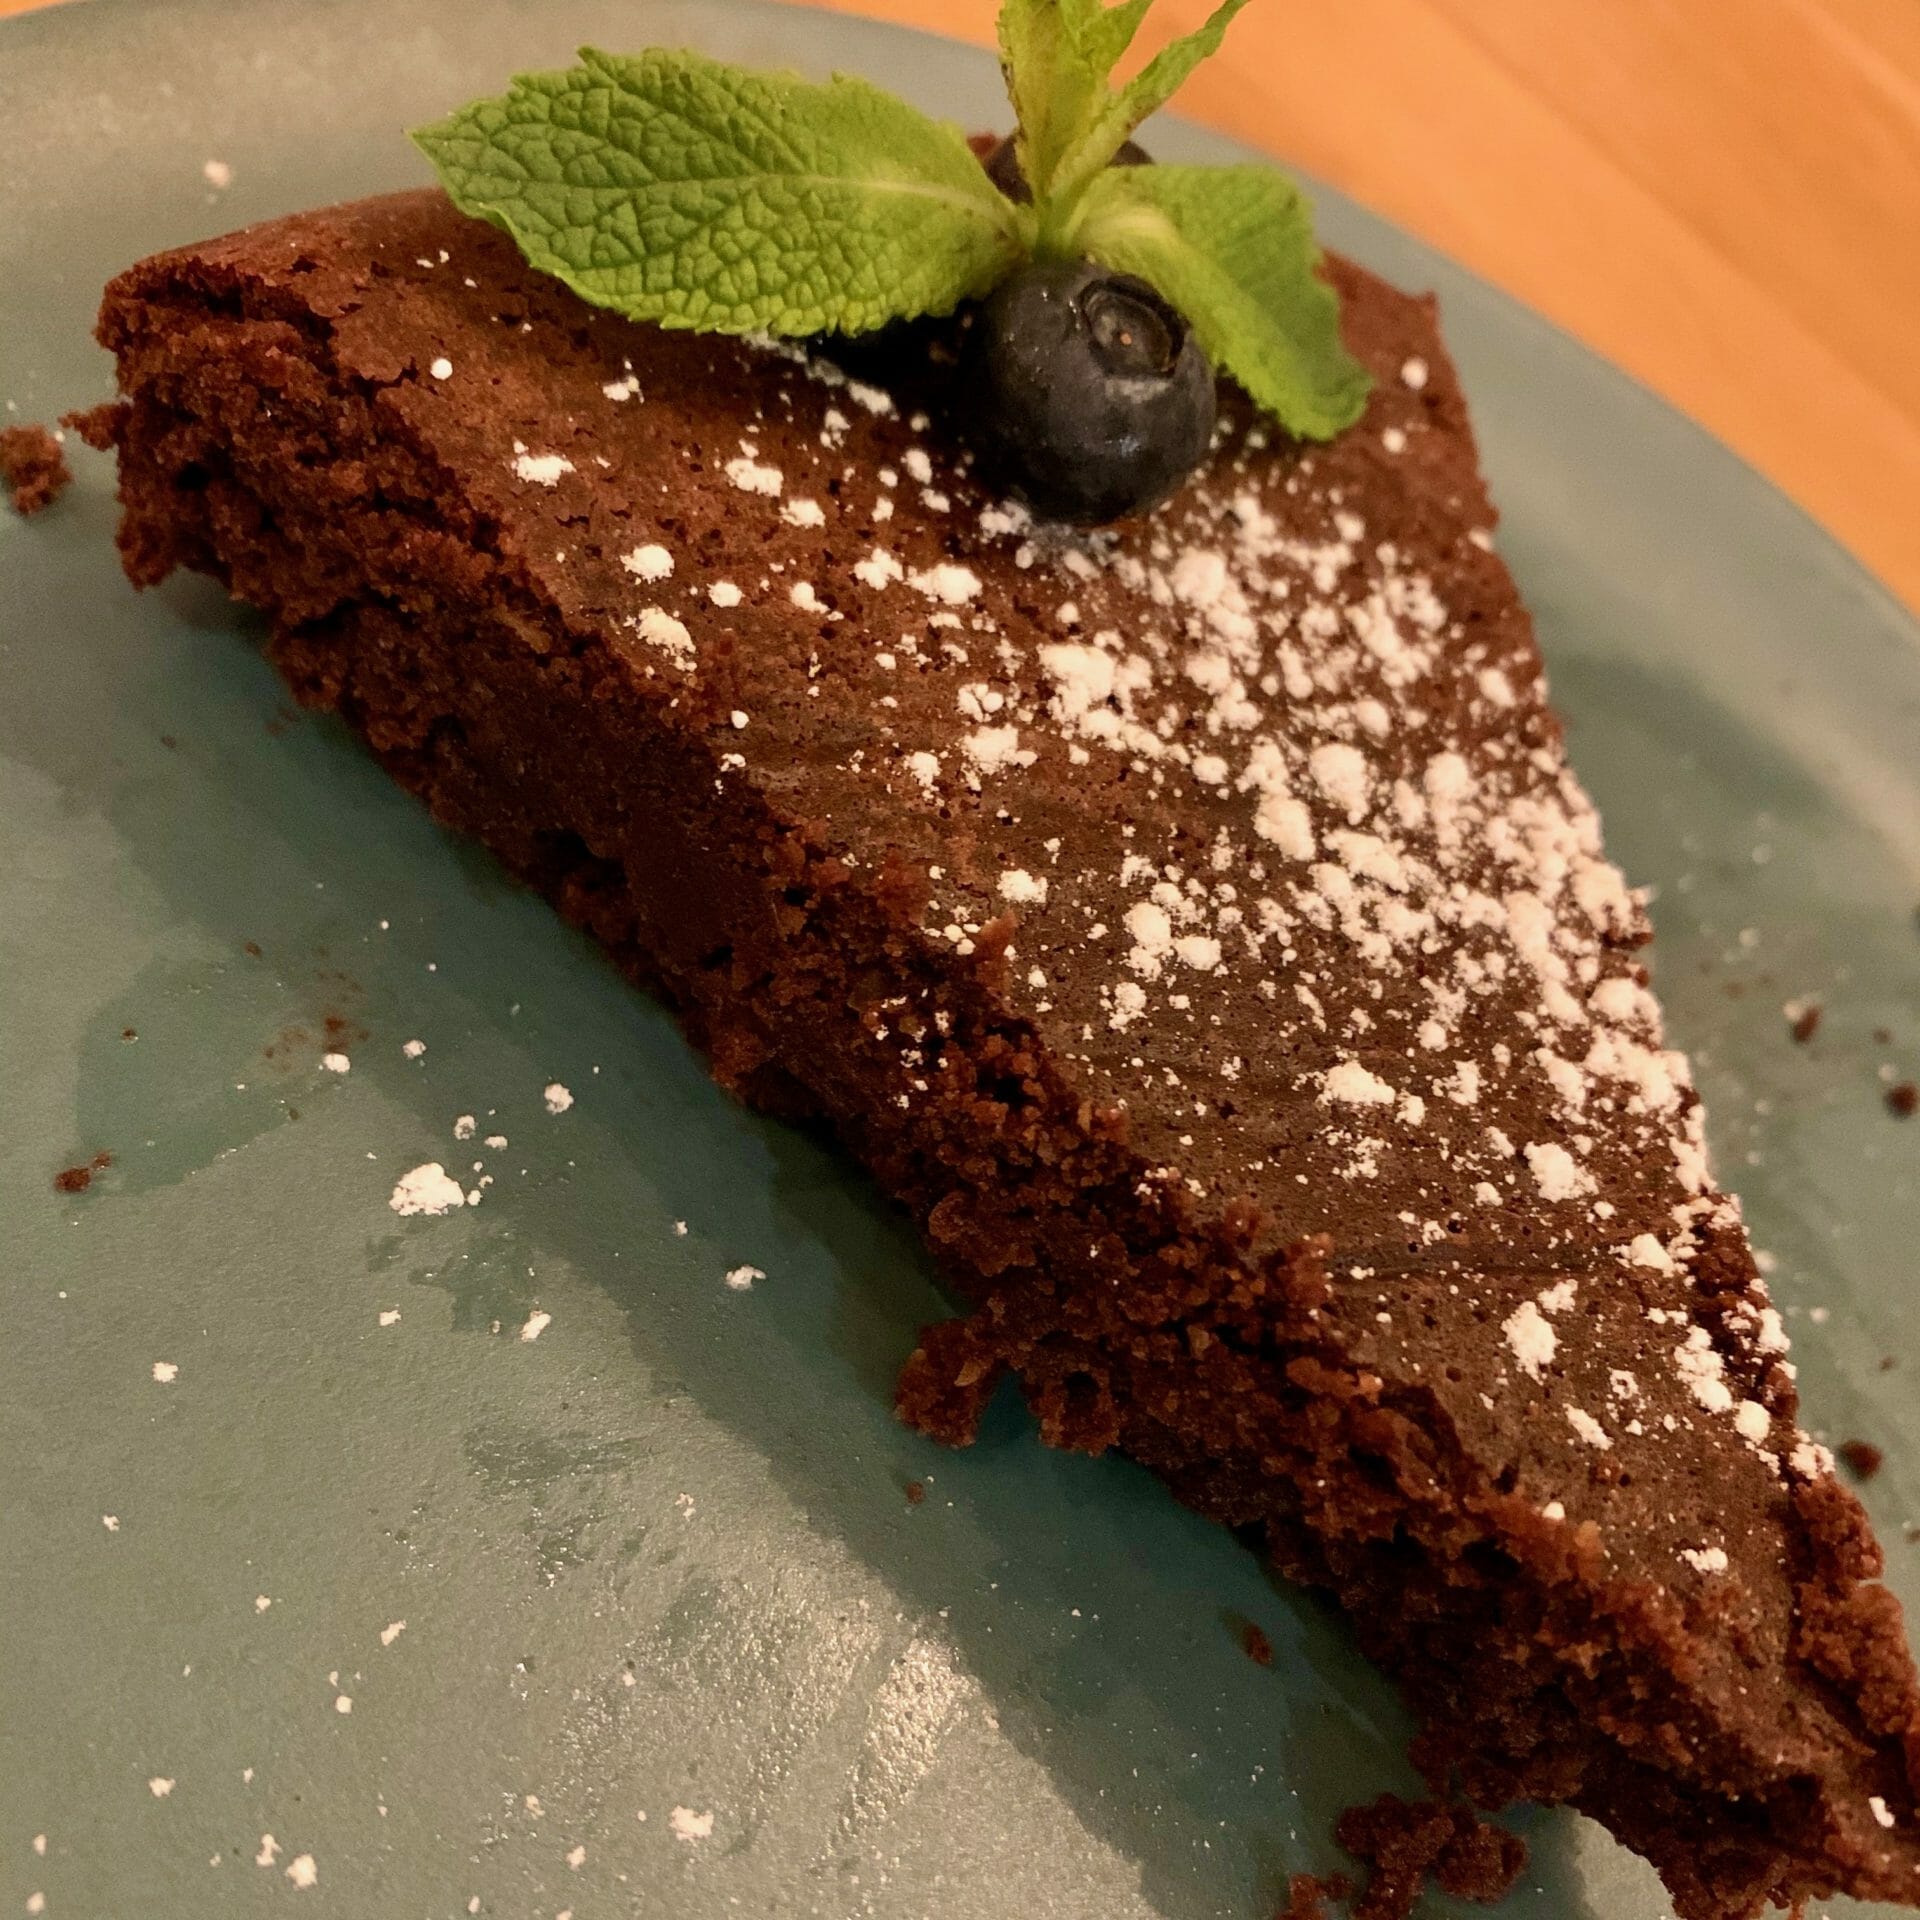 Another flourless chocolate cake